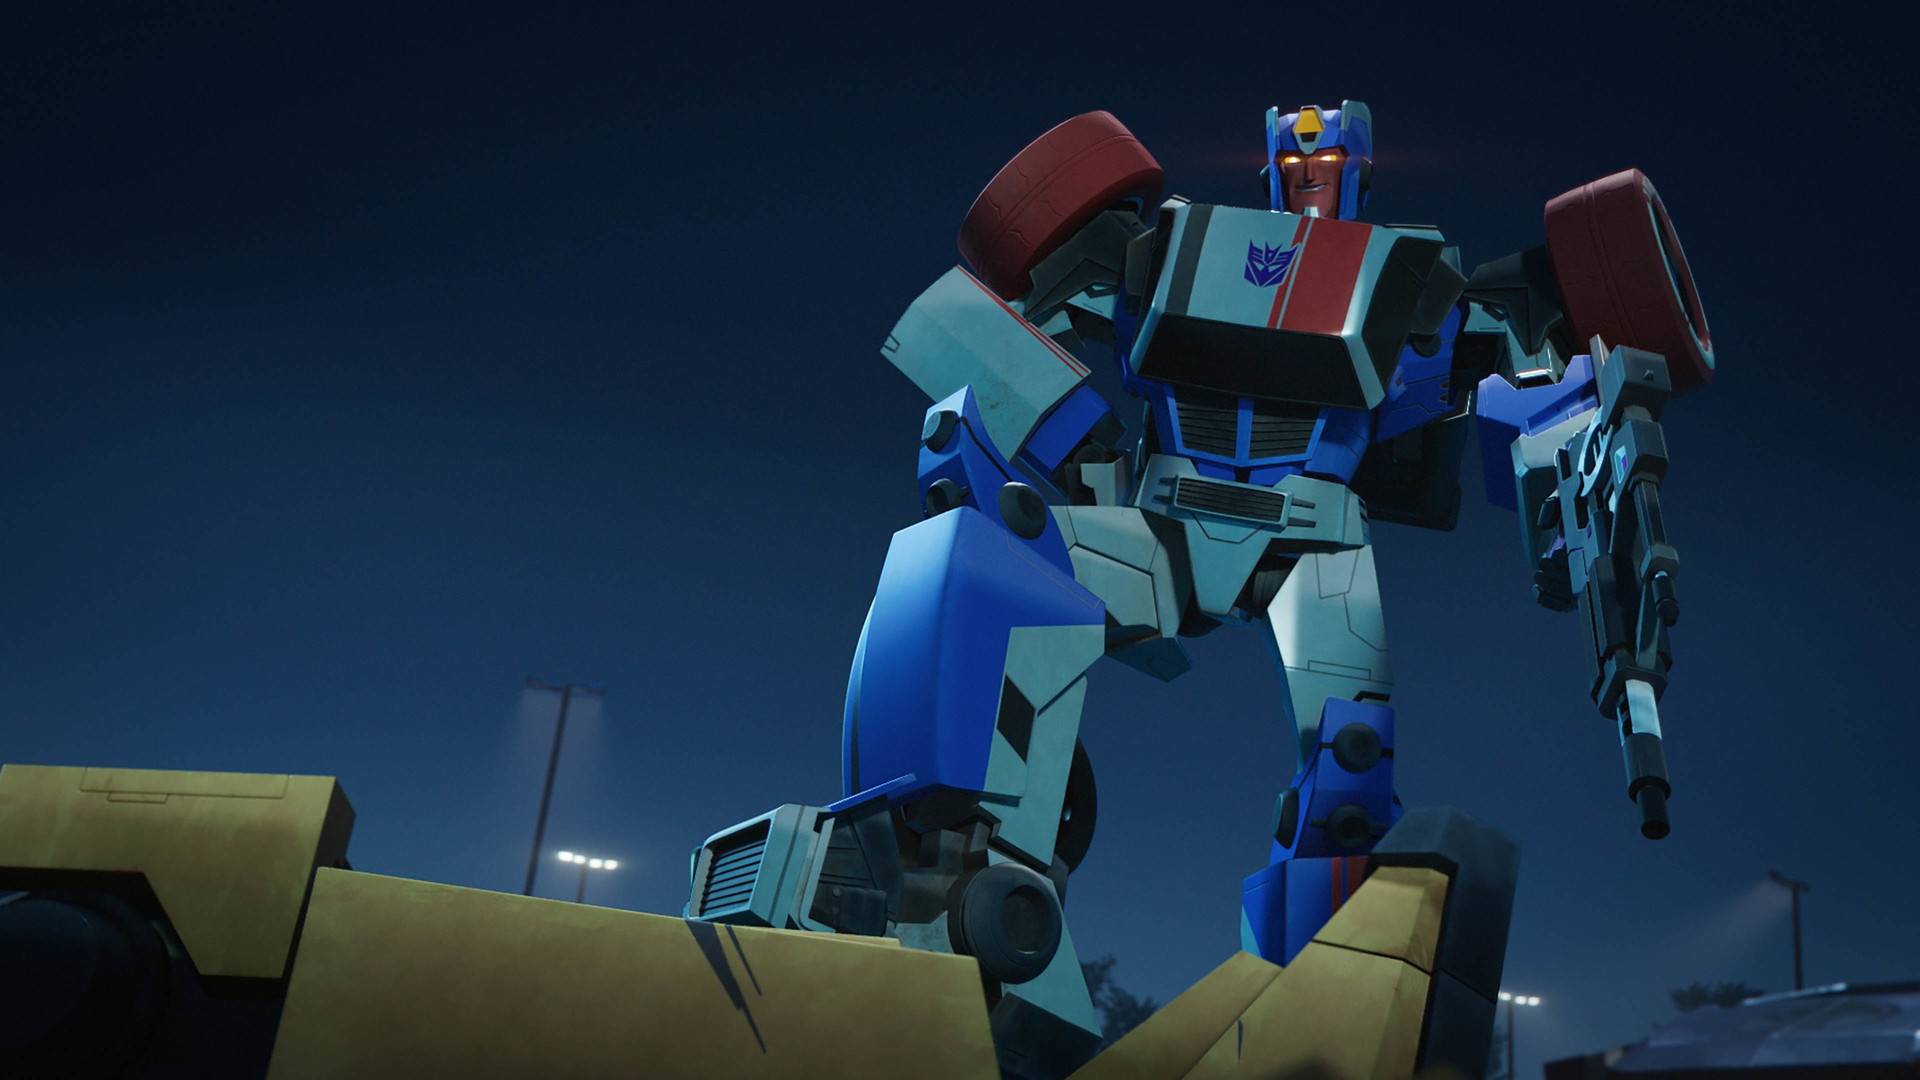 Transformers: Prime, S01 E02, FULL Episode, Cartoon